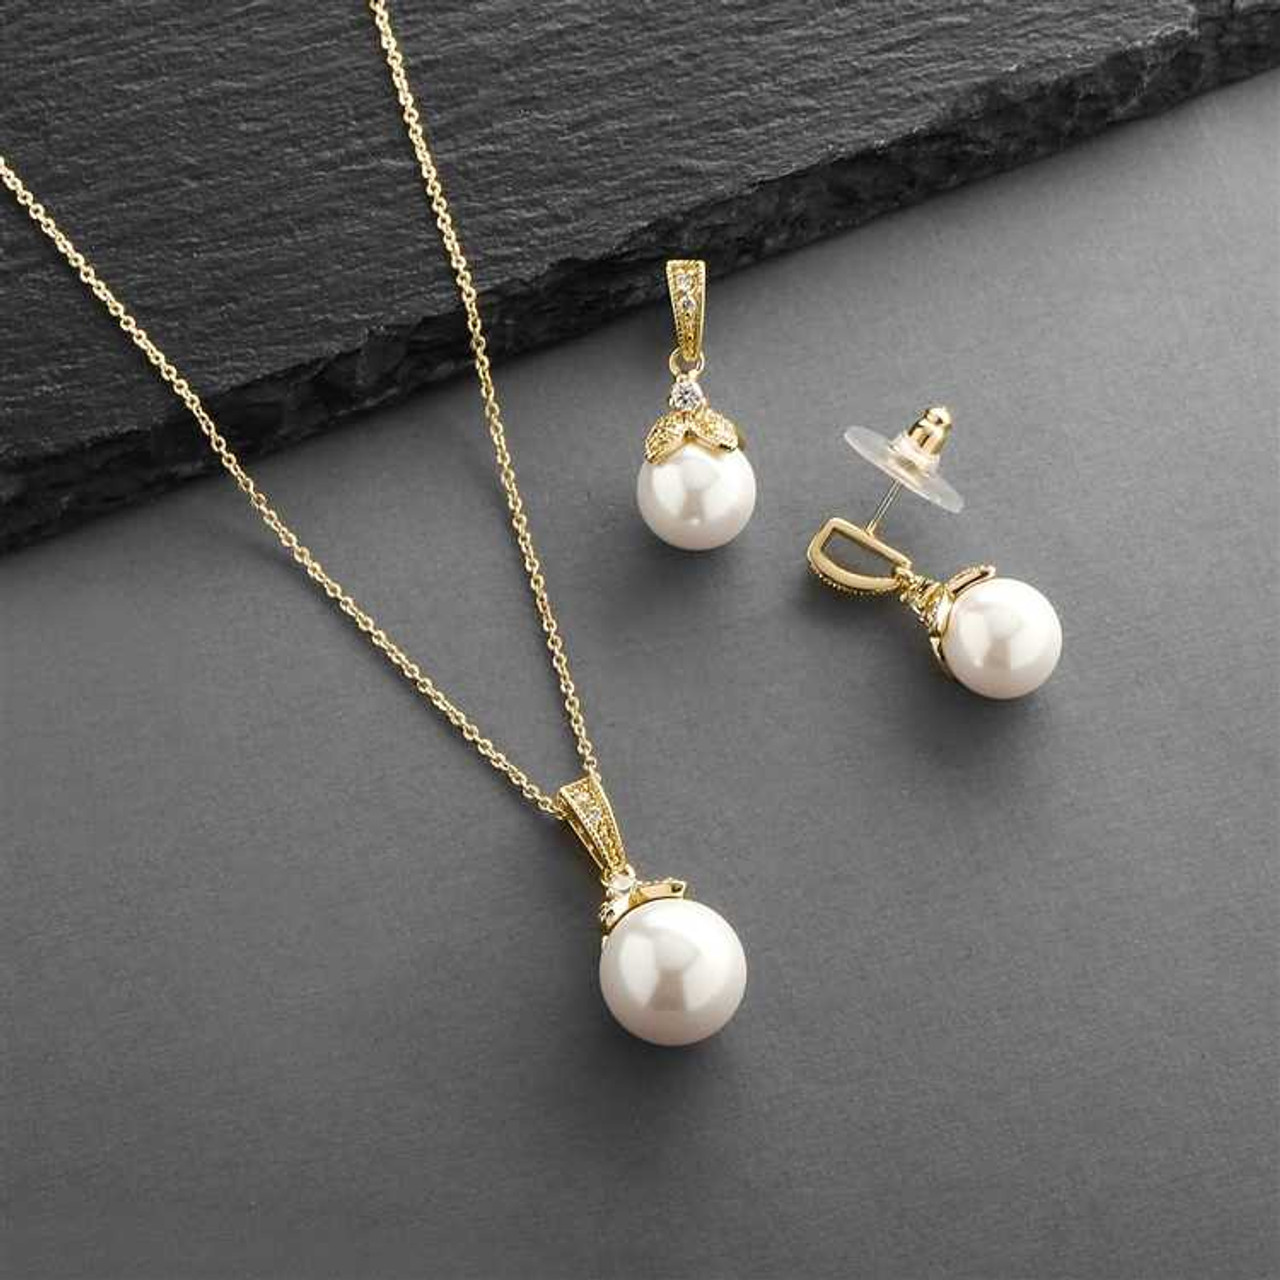 Multiline Calcutta Bridal Gold Plated Necklace Earring Set Shop Online  NCKN2883